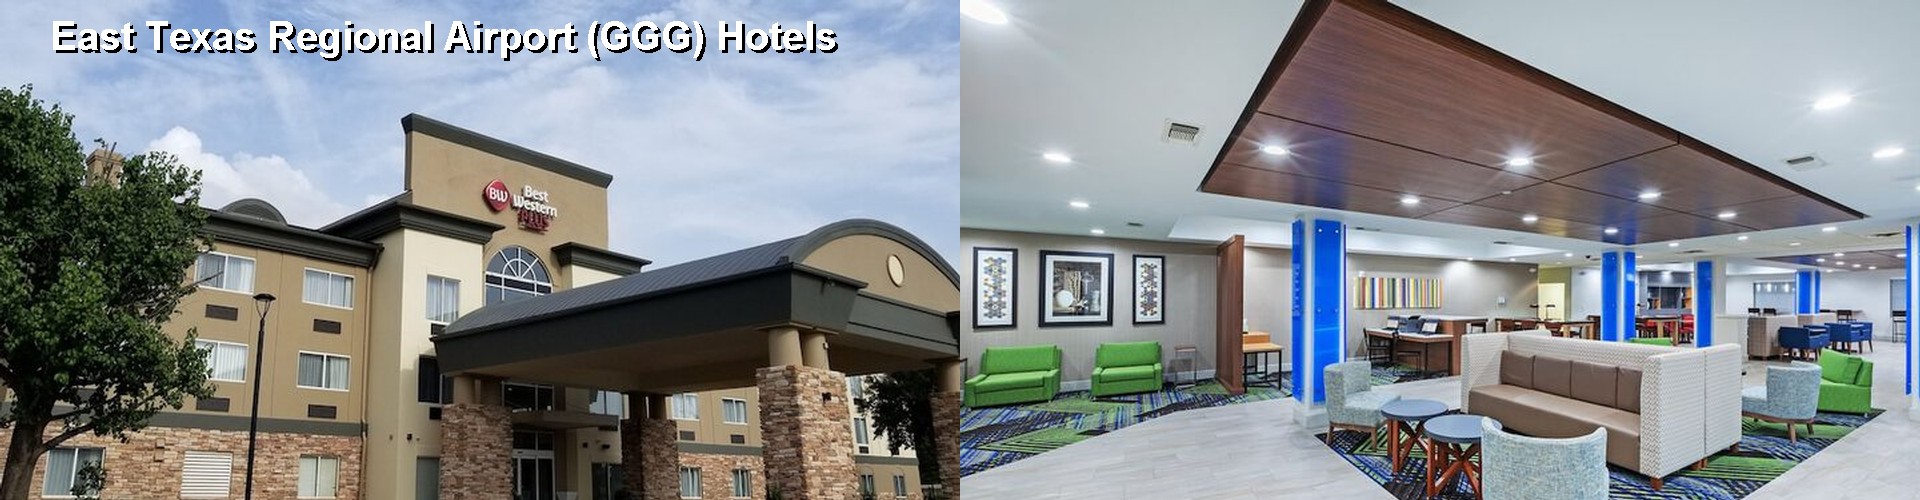 4 Best Hotels near East Texas Regional Airport (GGG)